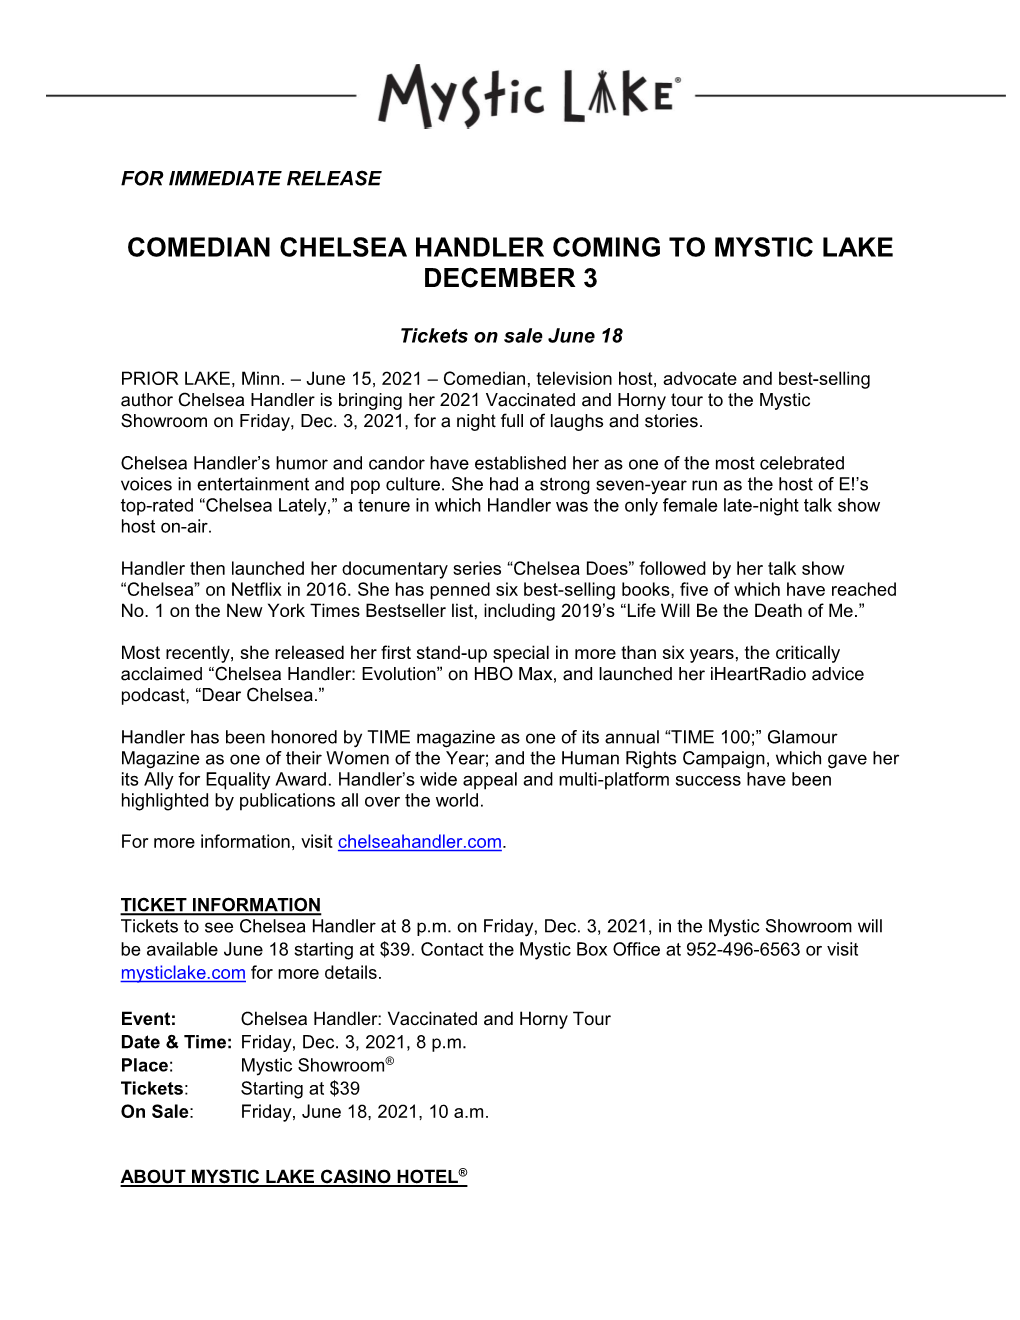 Comedian Chelsea Handler Coming to Mystic Lake December 3